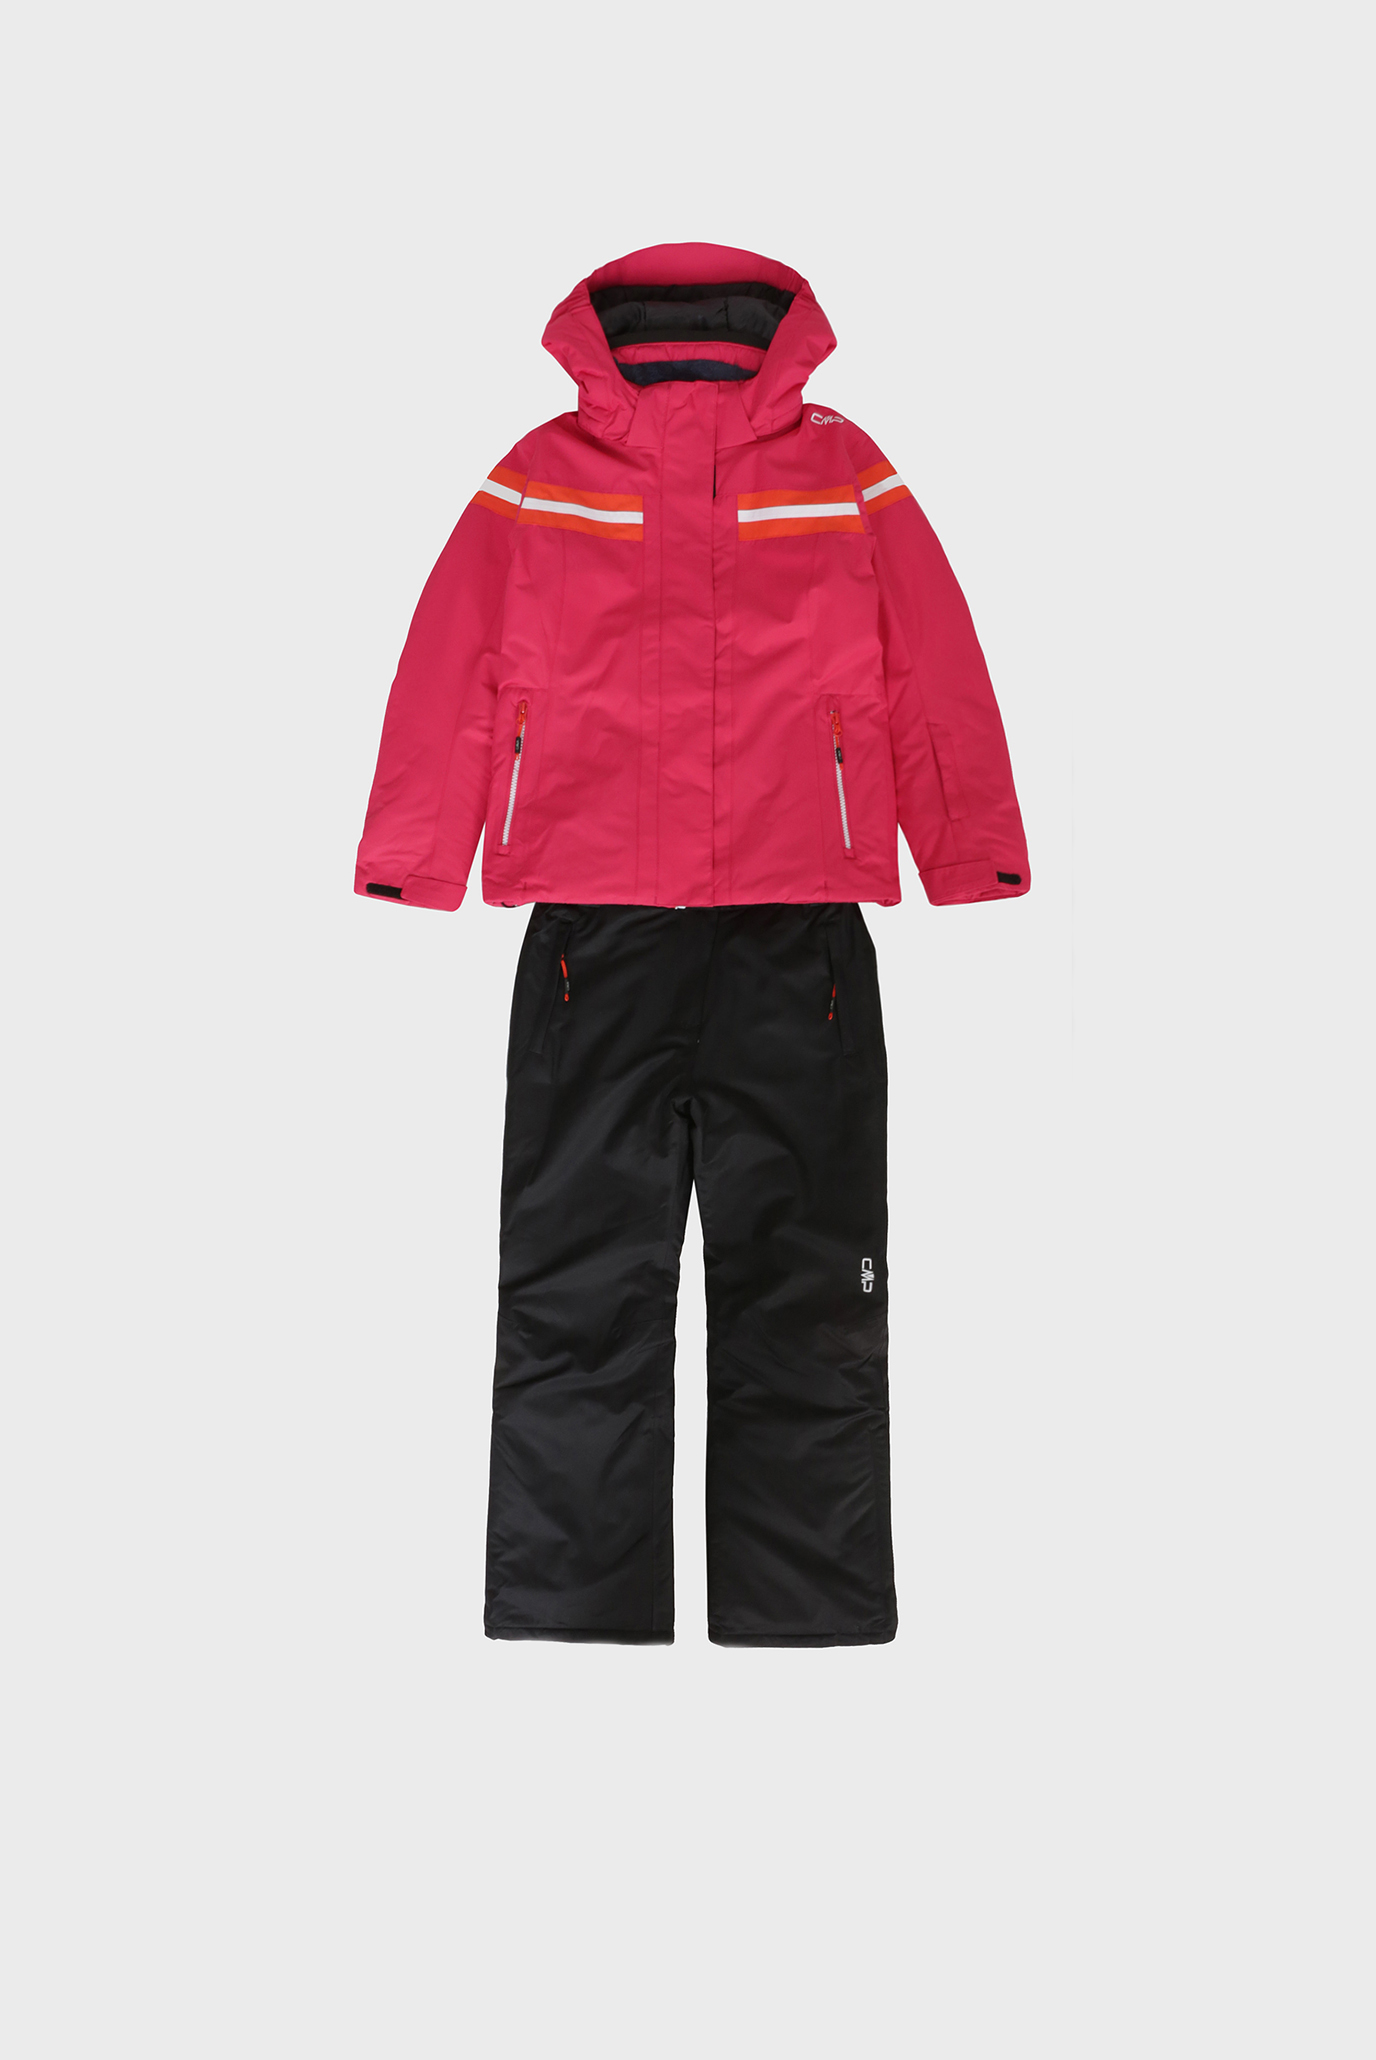 Дитячий лижний костюм (куртка, штани) 1